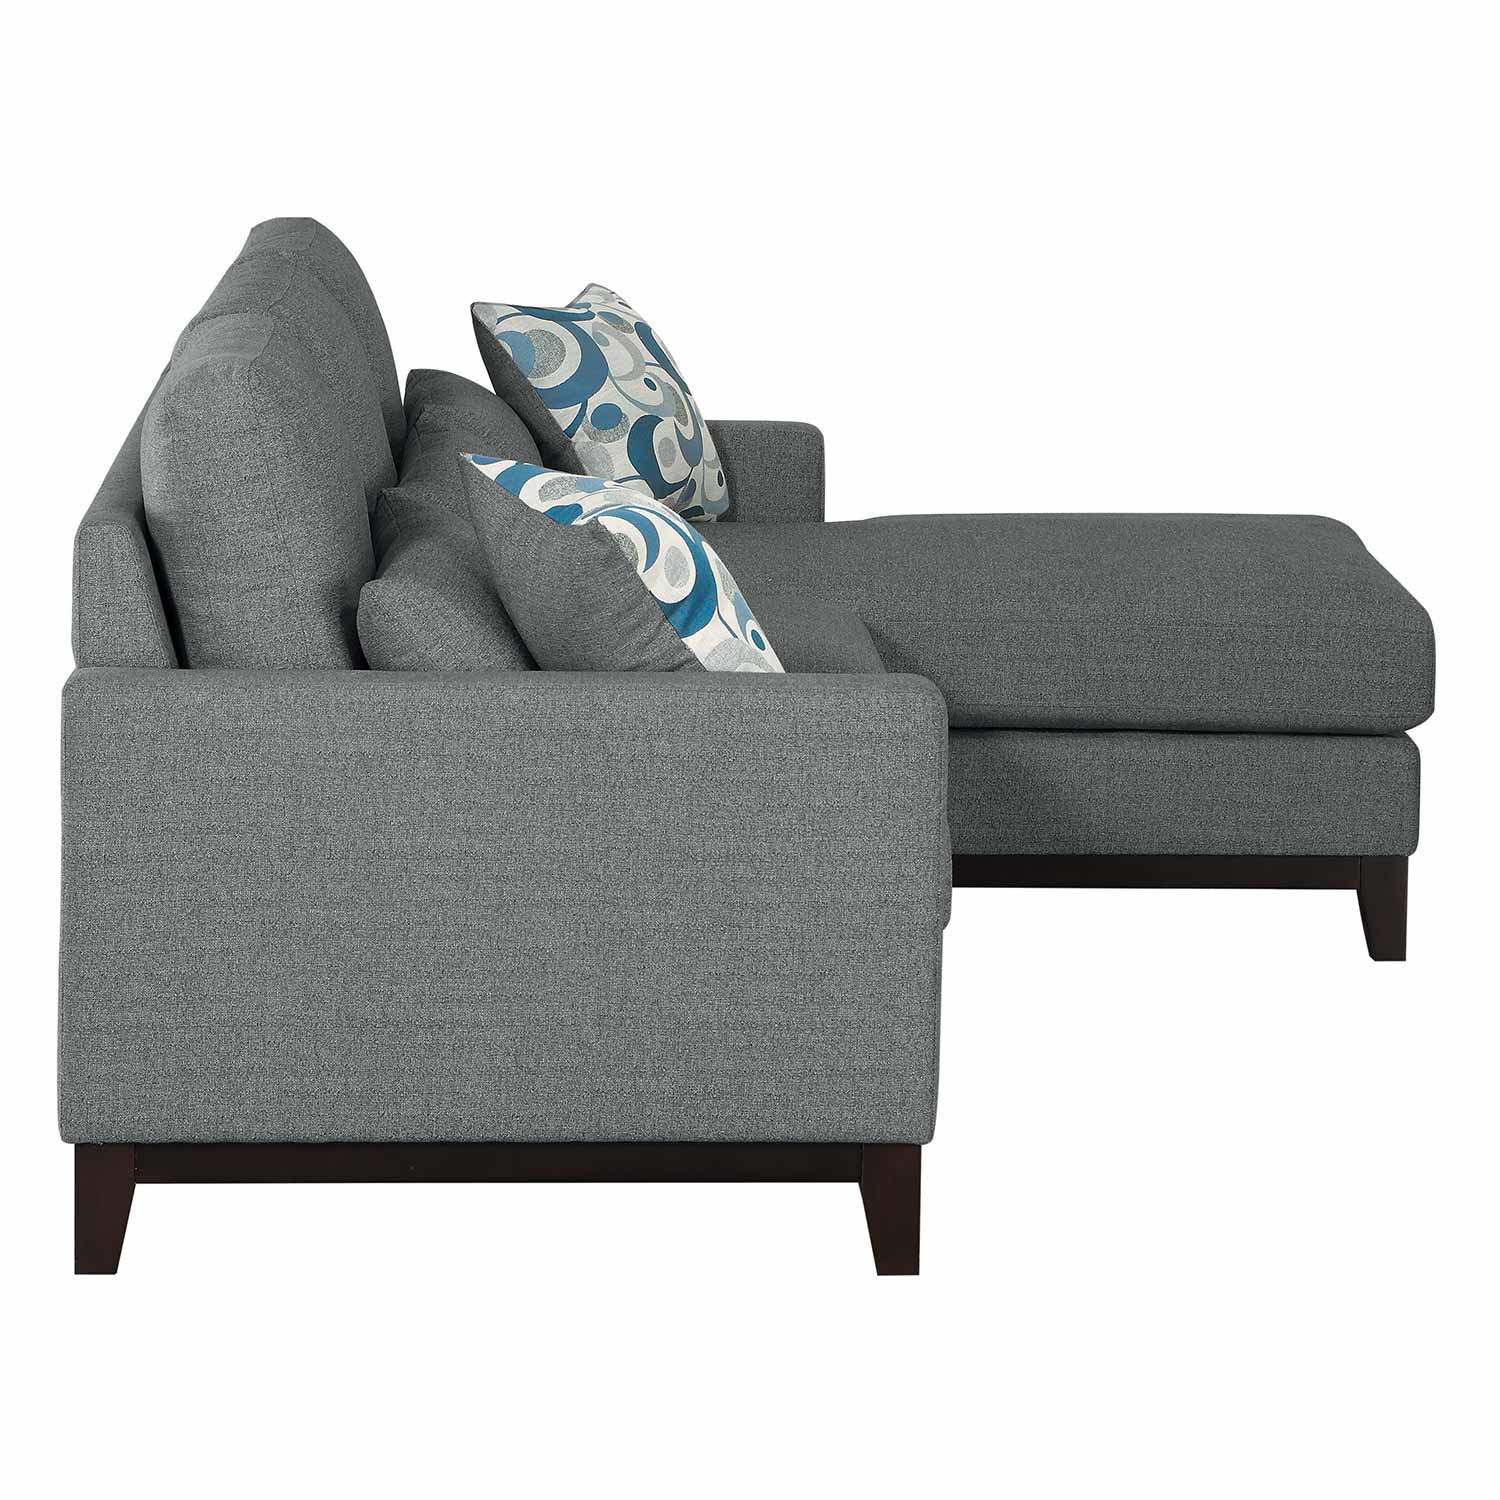 Homelegance Greerman Sectional Sofa Set - Gray